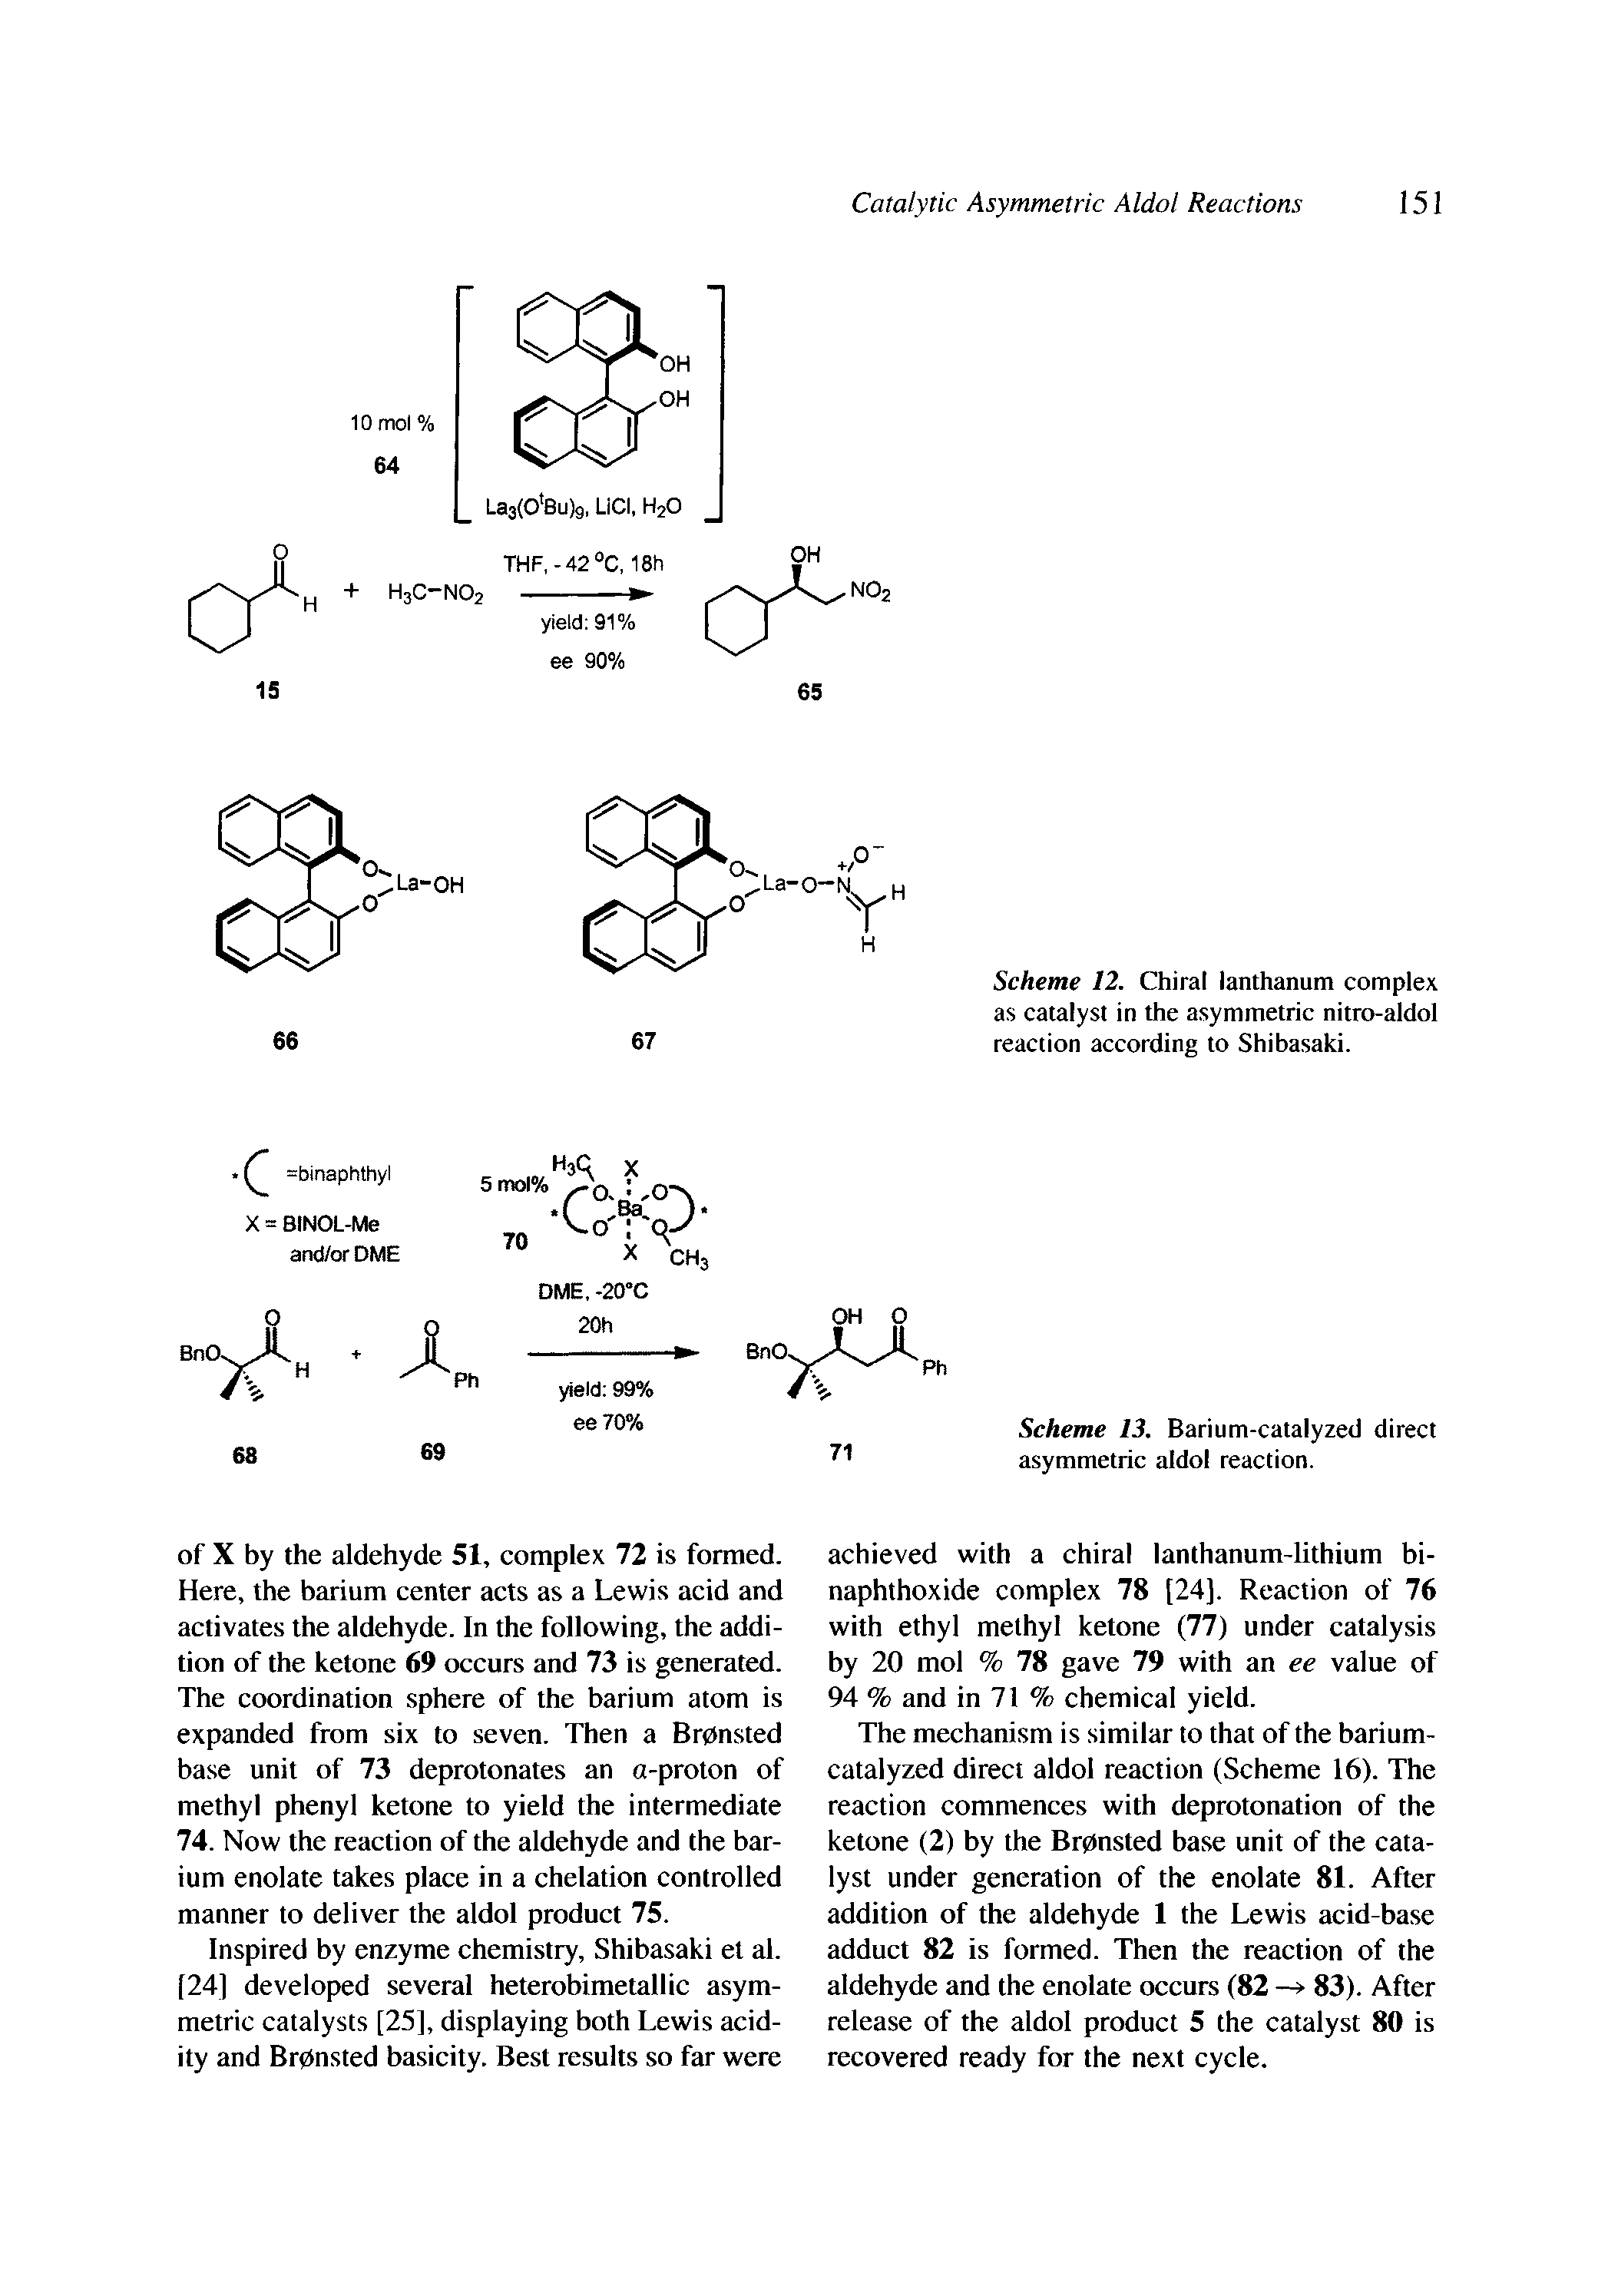 Scheme 12. Chiral lanthanum complex as catalyst in the asymmetric nitro-aldol reaction according to Shibasaki.